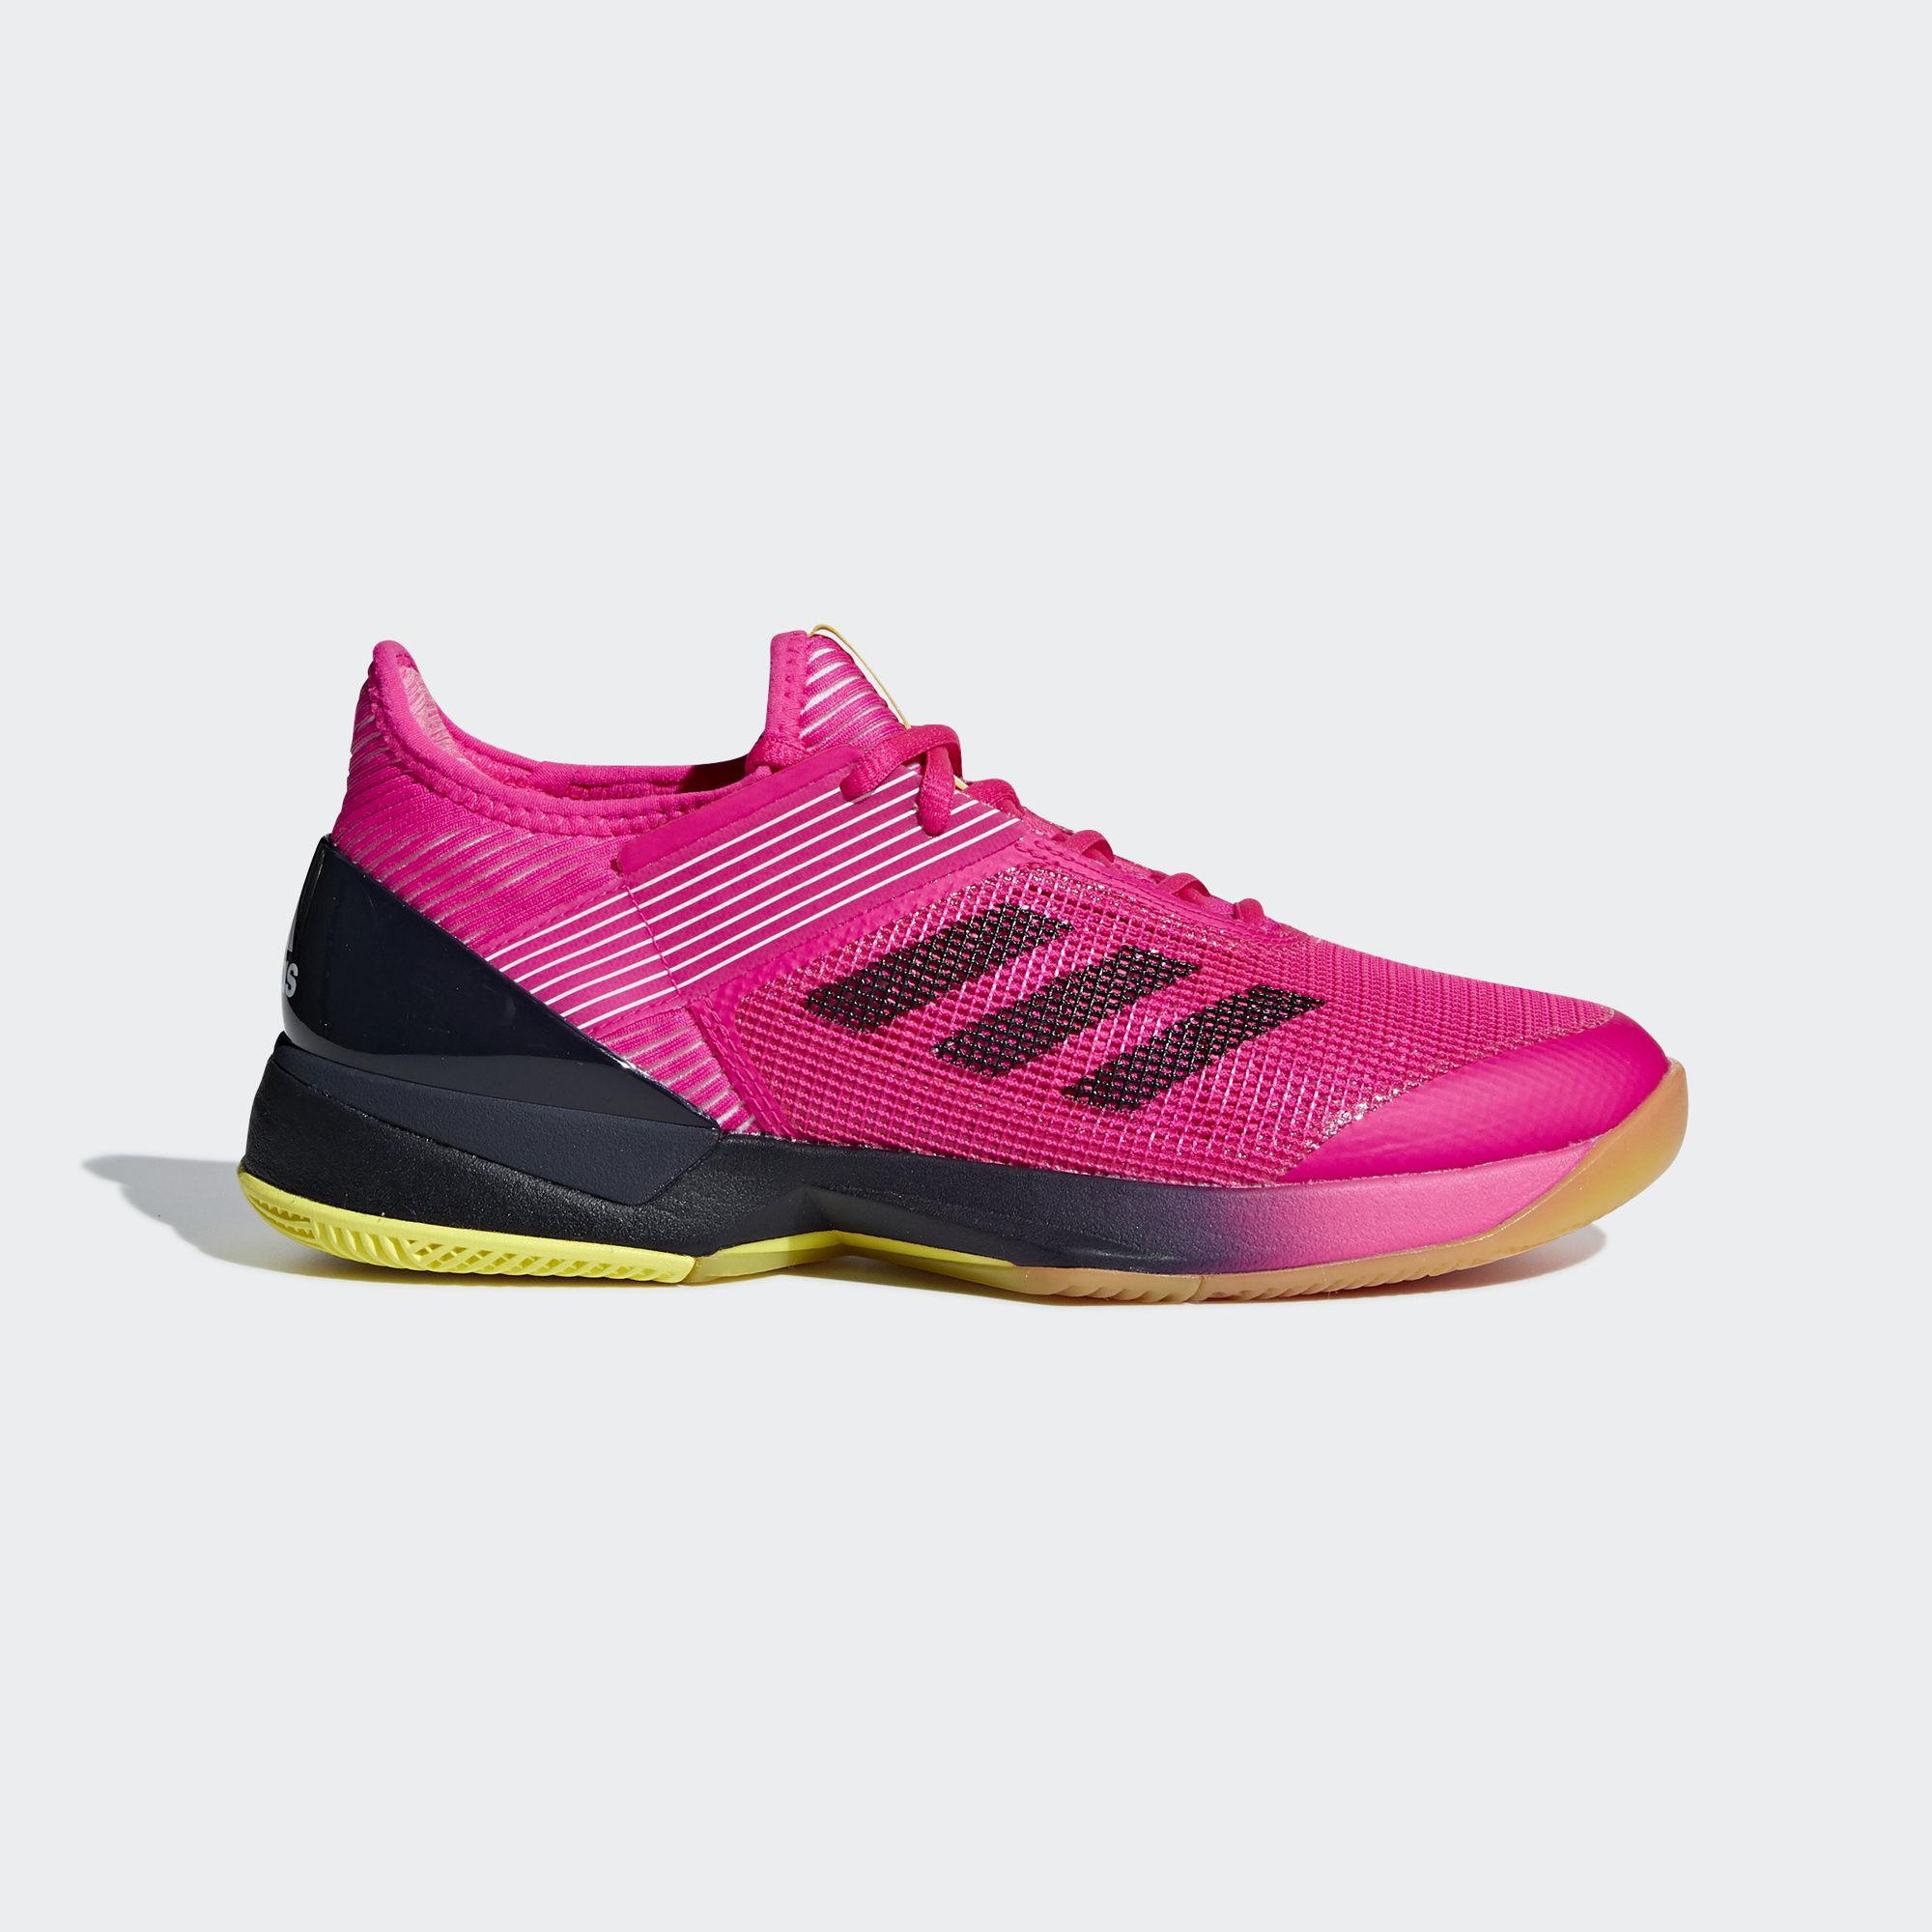 Adidas Womens Adizero Ubersonic 3.0 Tennis Shoes - Shock Pink/Legend ...